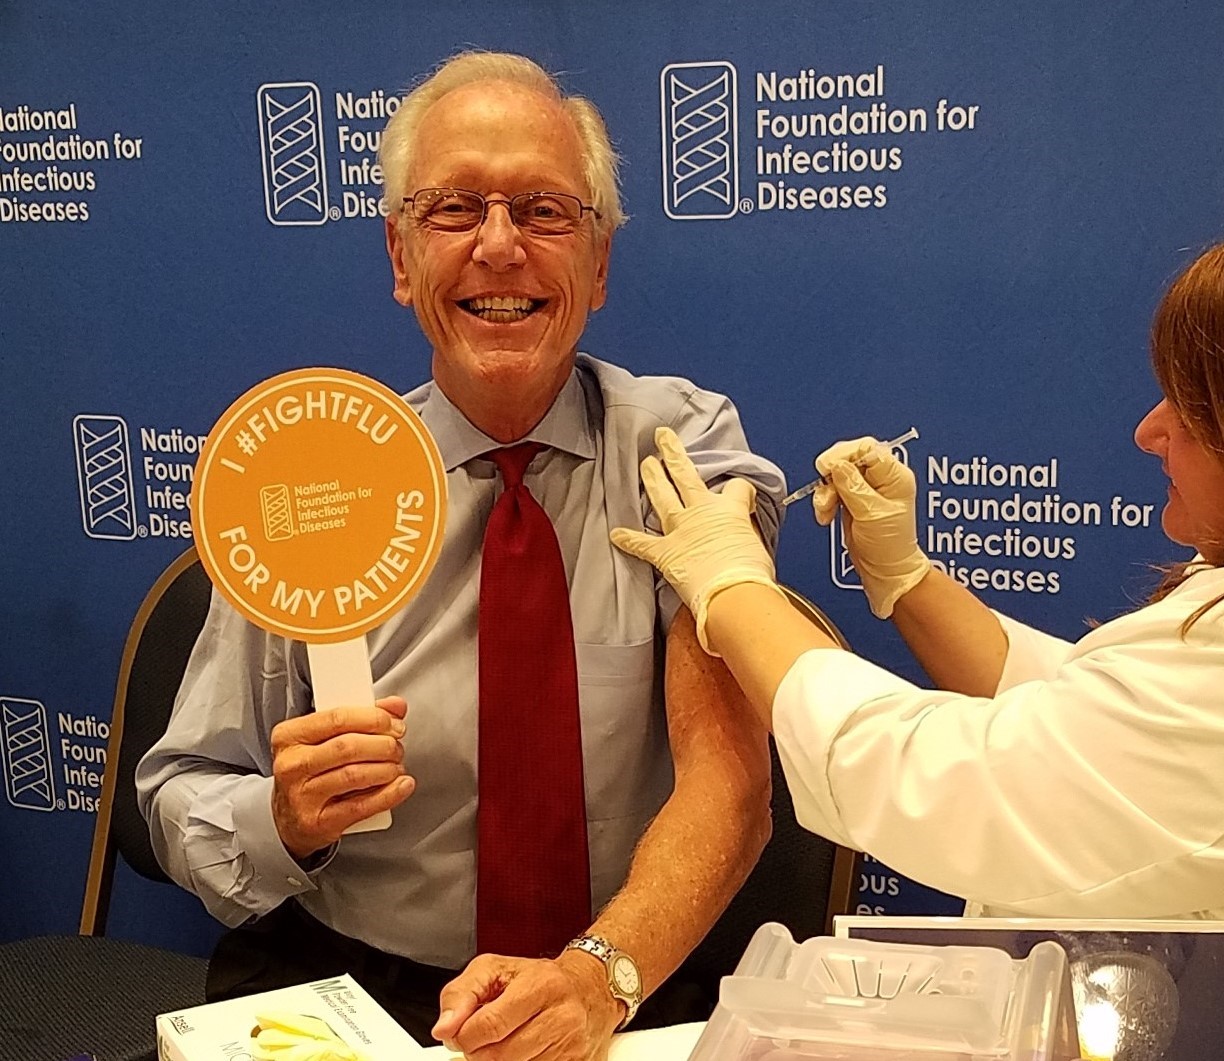 Dr. William Schaffner receiving the flu vaccine.